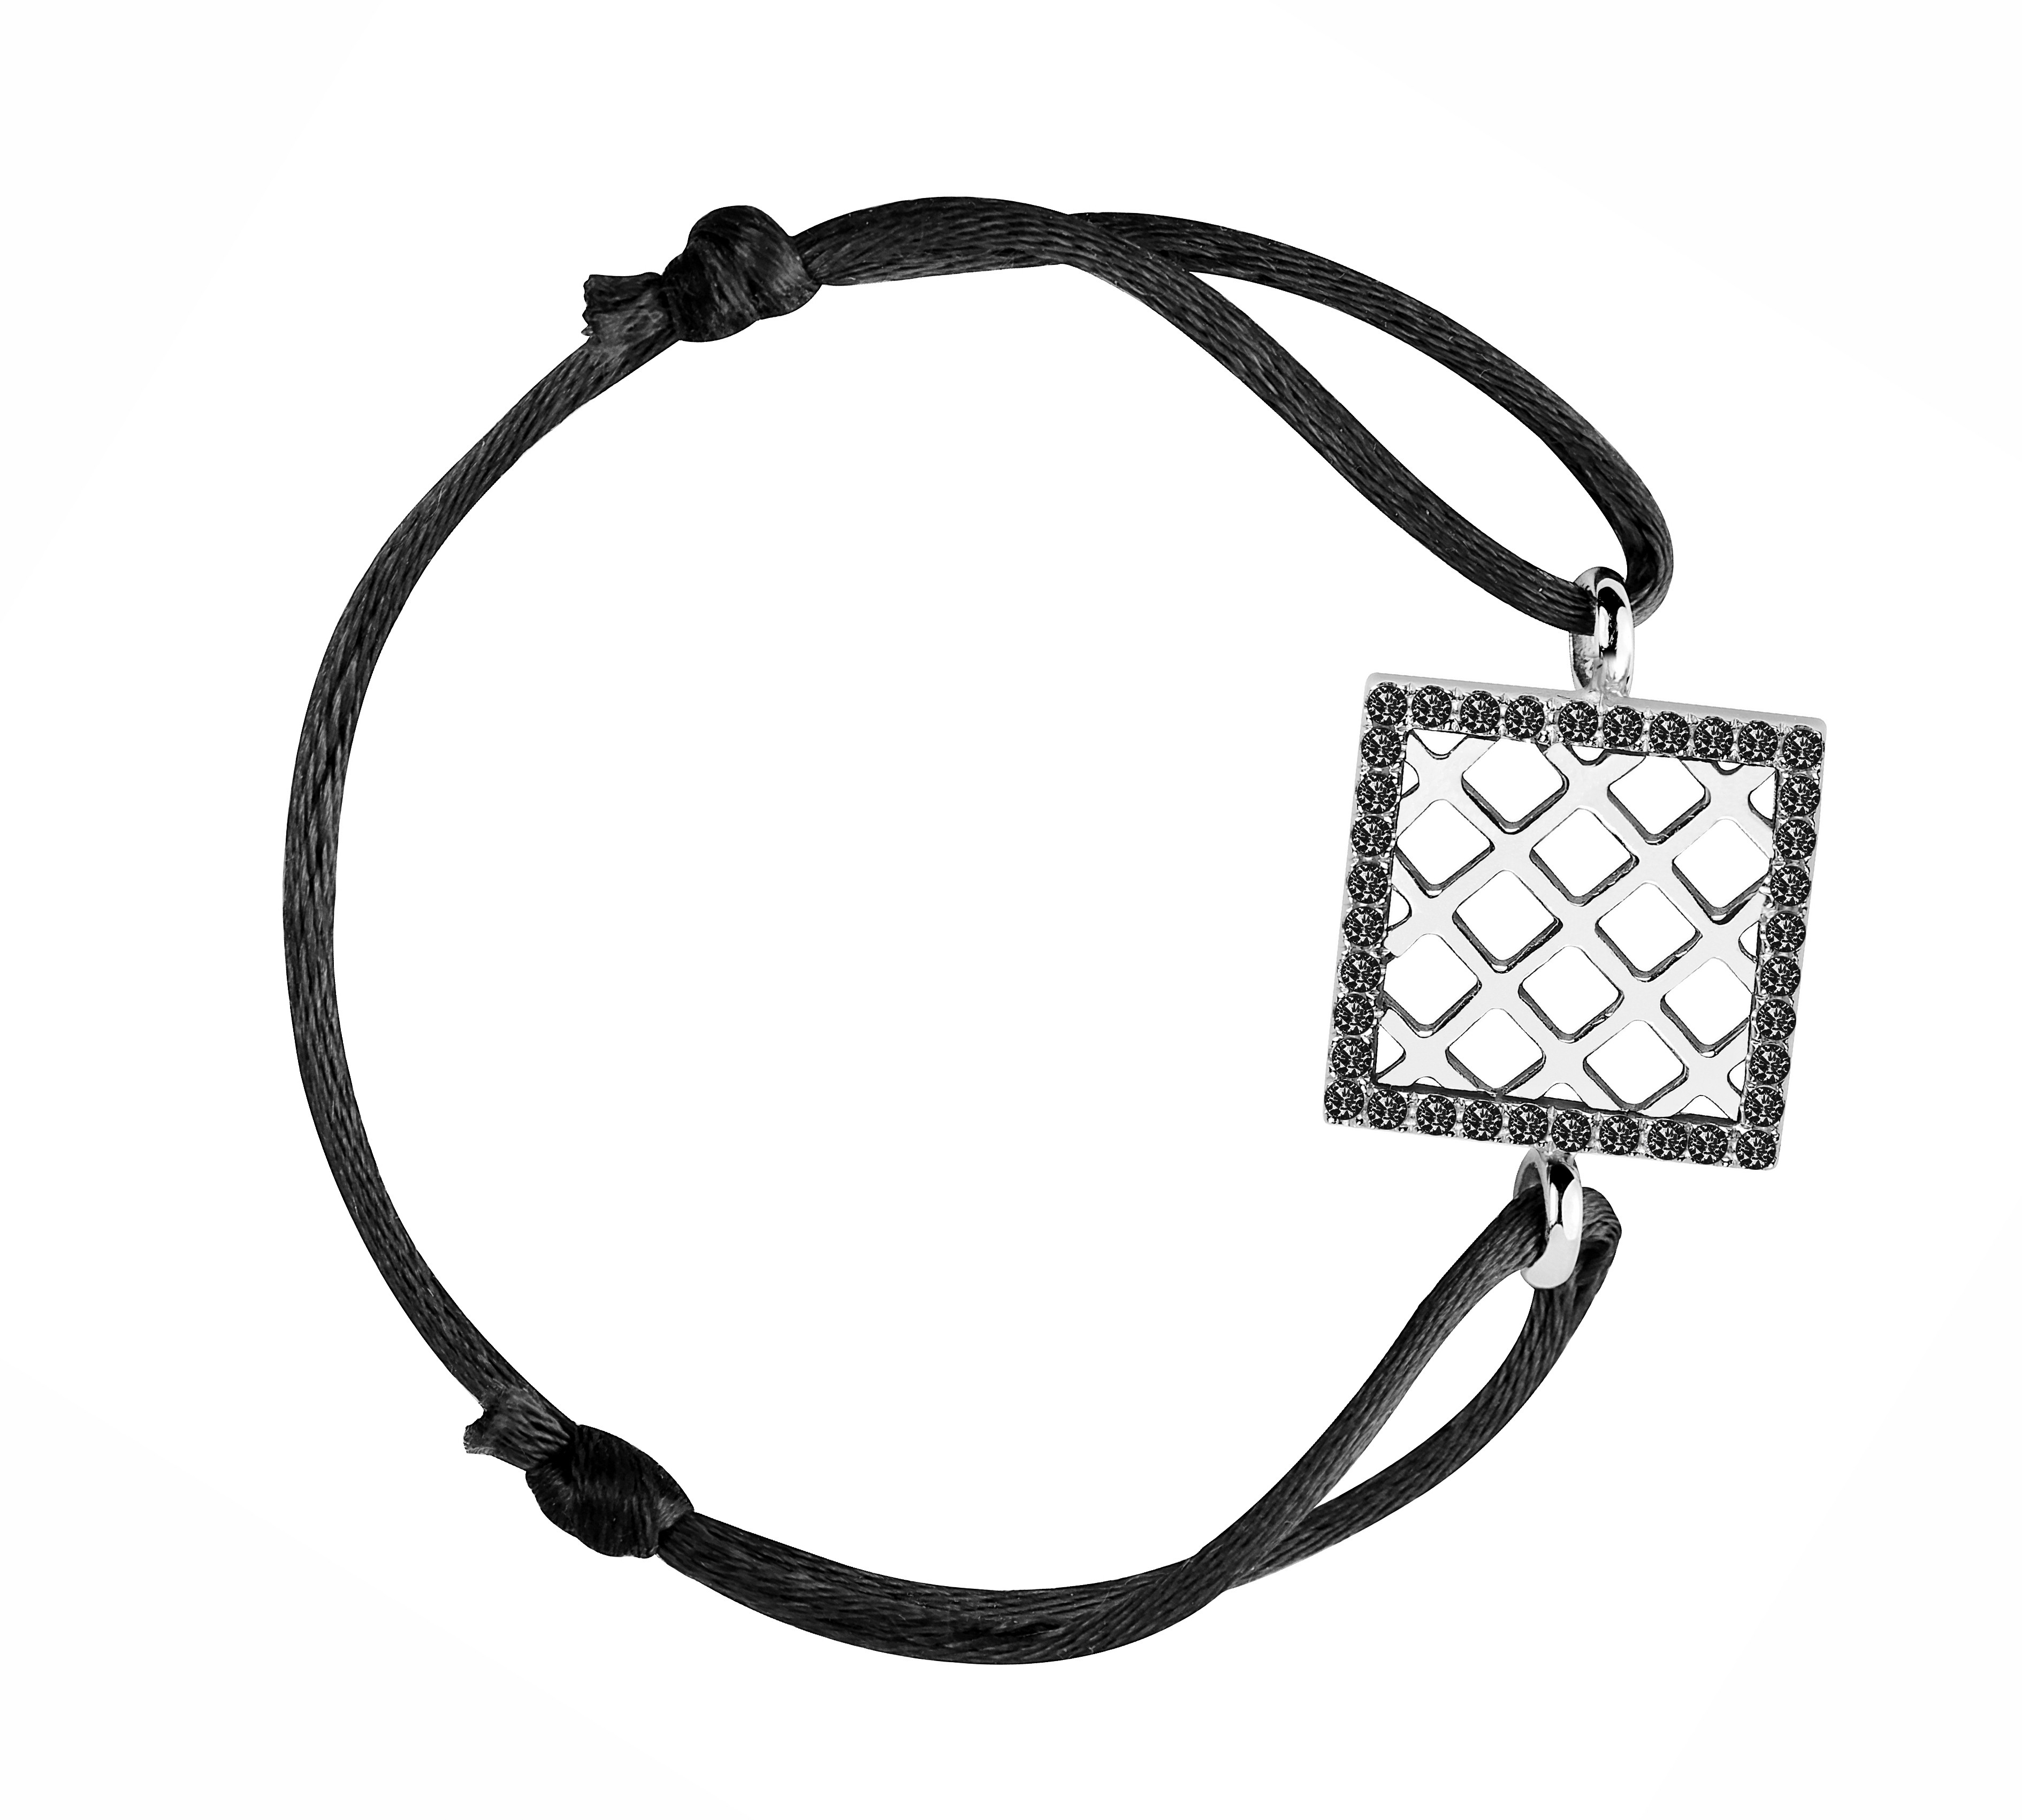 Moralité Bakwani7 Or diamants noirs – Bracelet Cordon